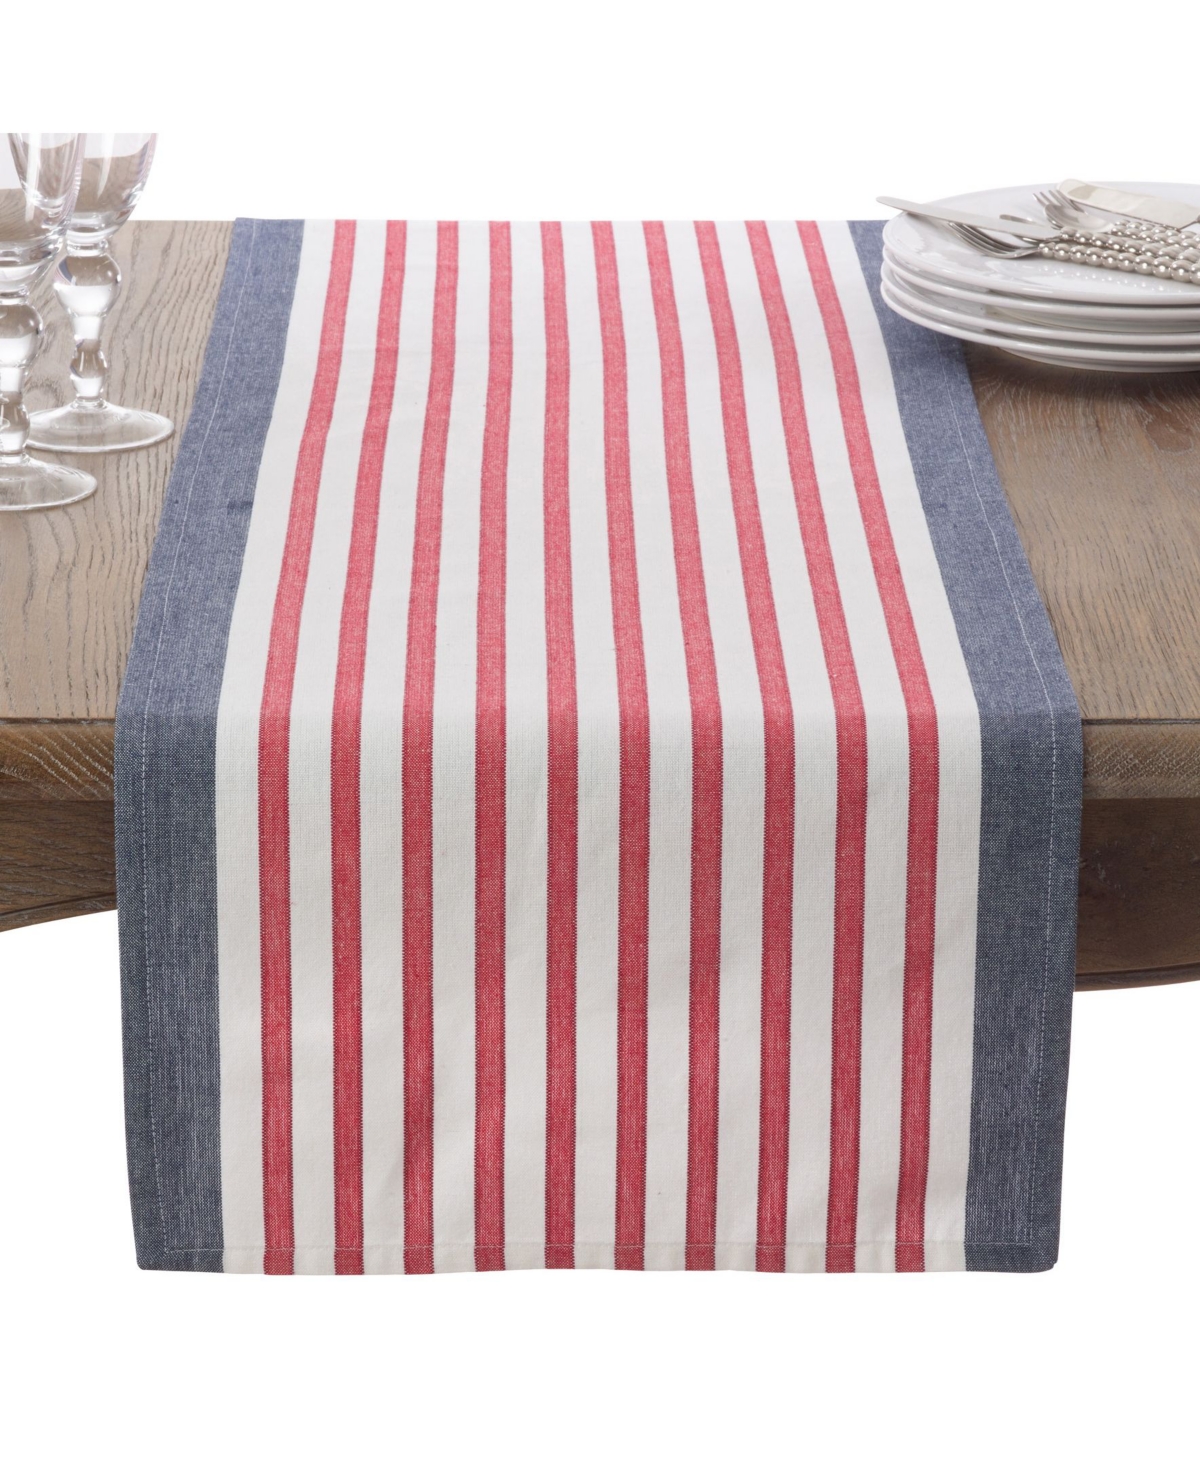 Saro Lifestyle American Flag Usa Red White Blue Stripe Cotton Table Runner